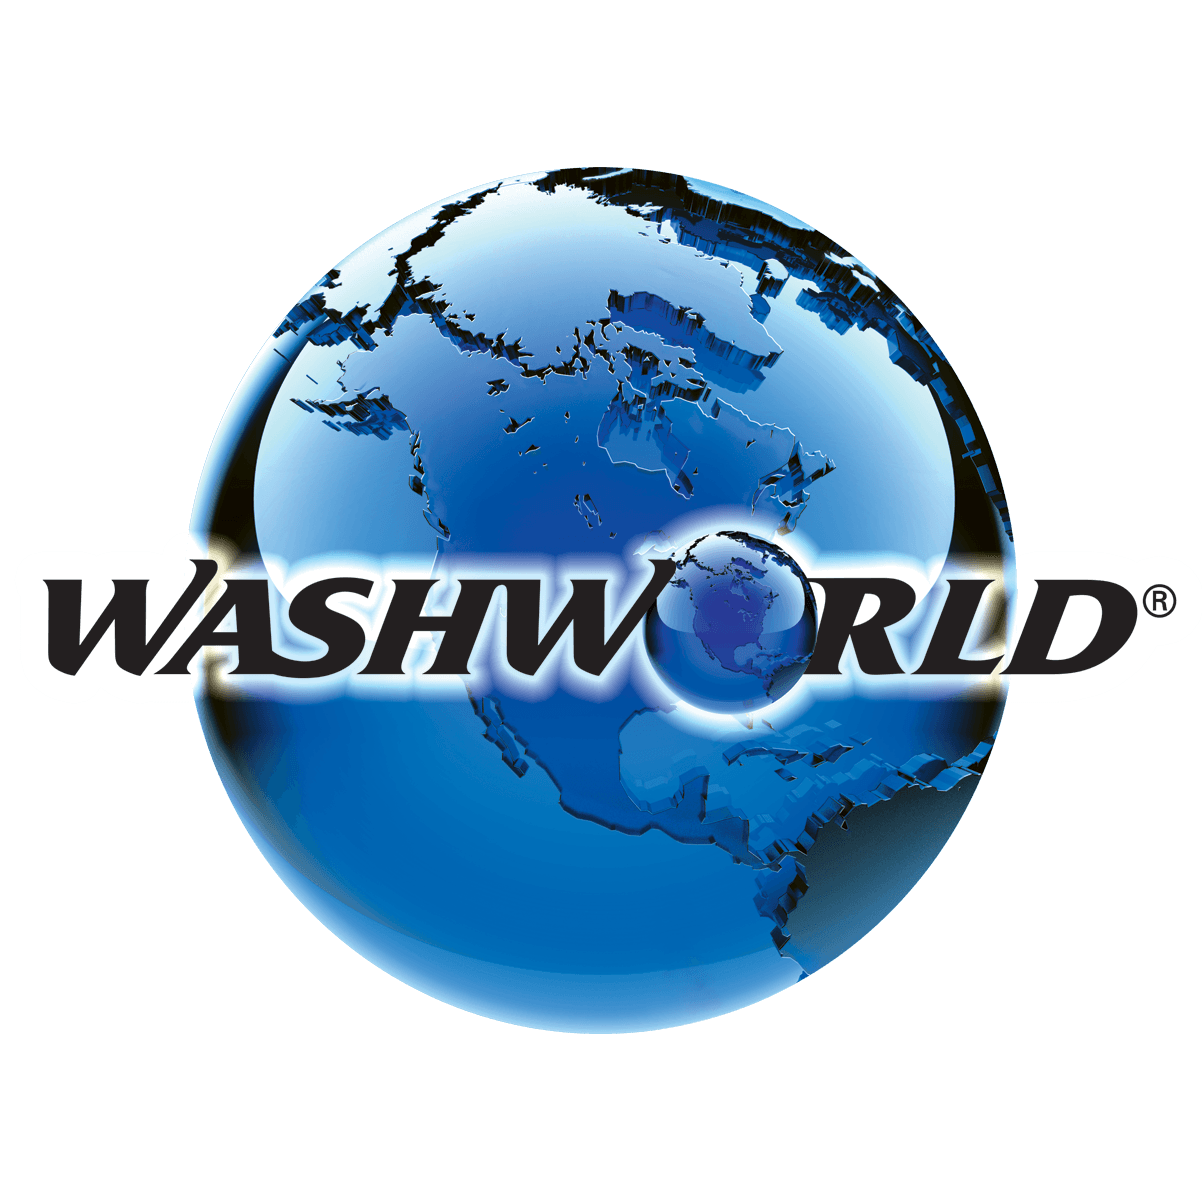 washworld car wash equipment logo reabrand